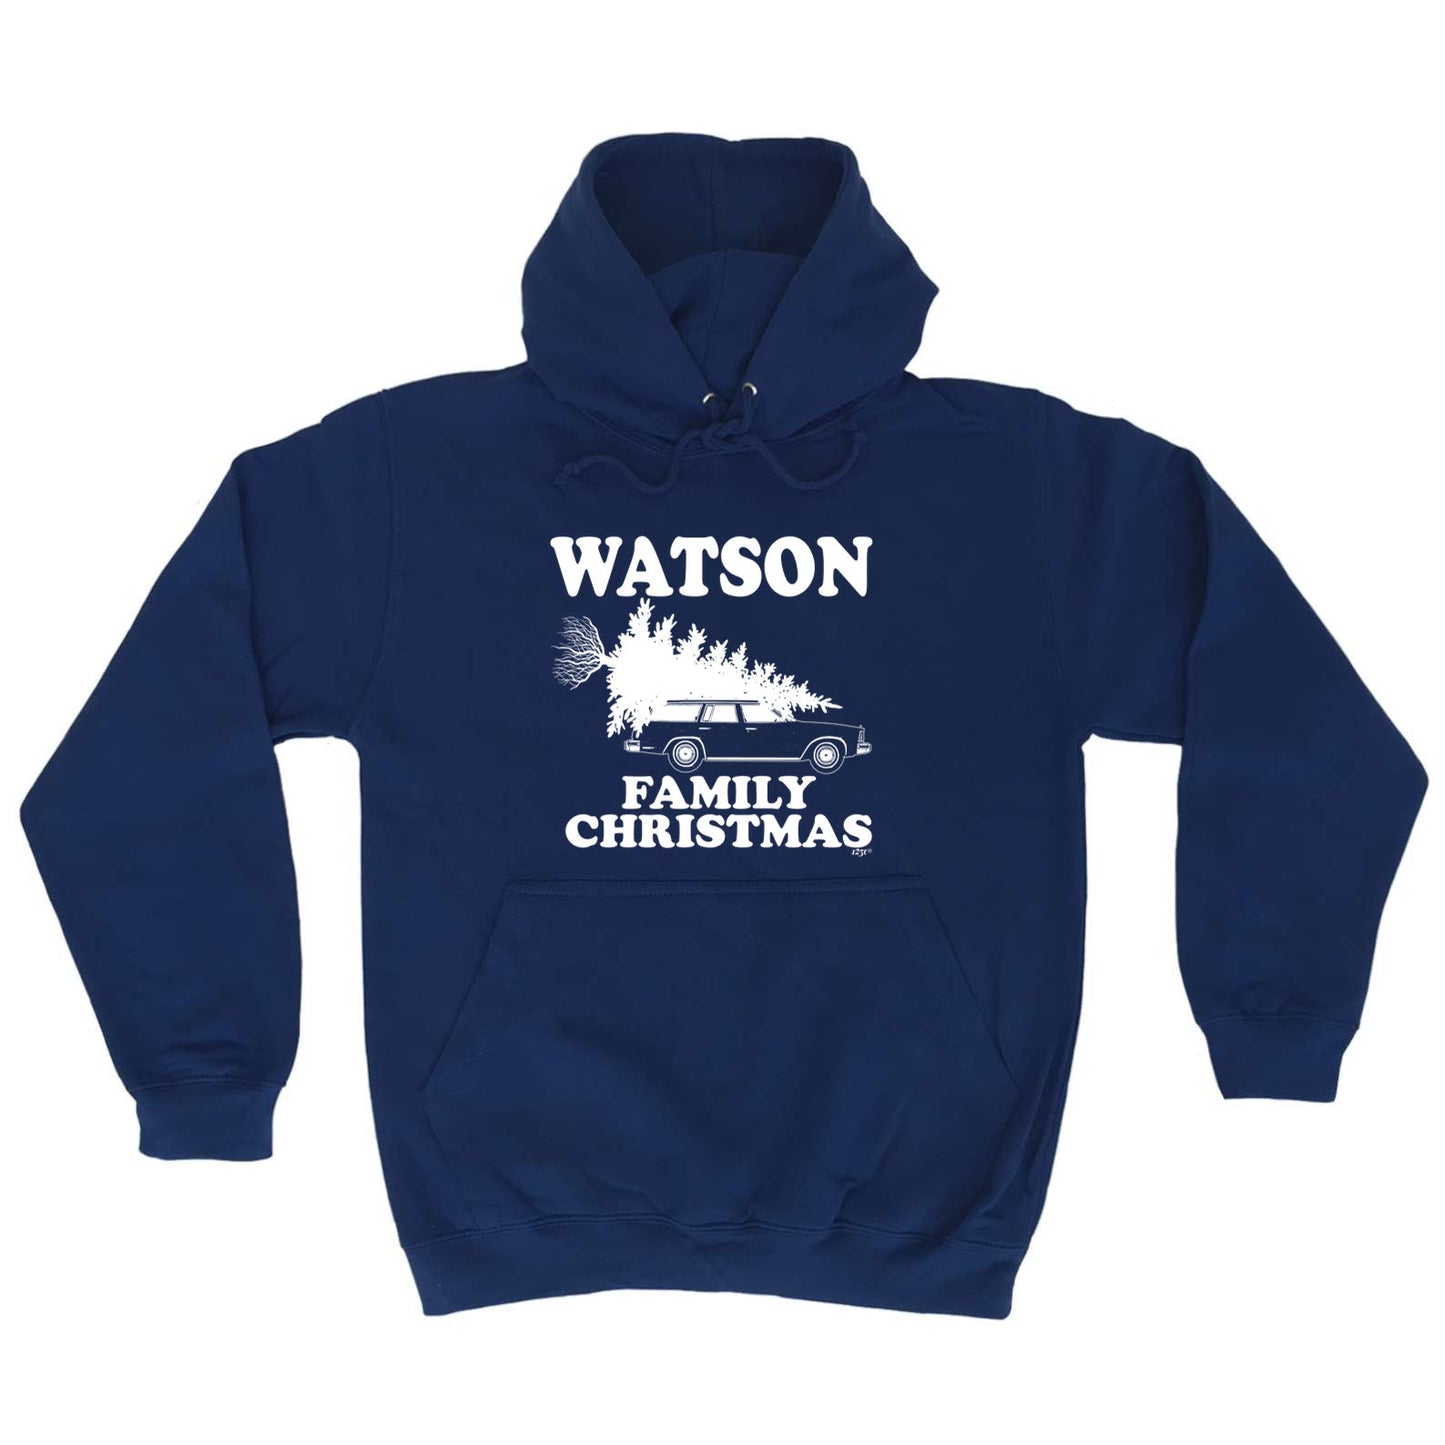 Family Christmas Watson - Xmas Novelty Hoodies Hoodie